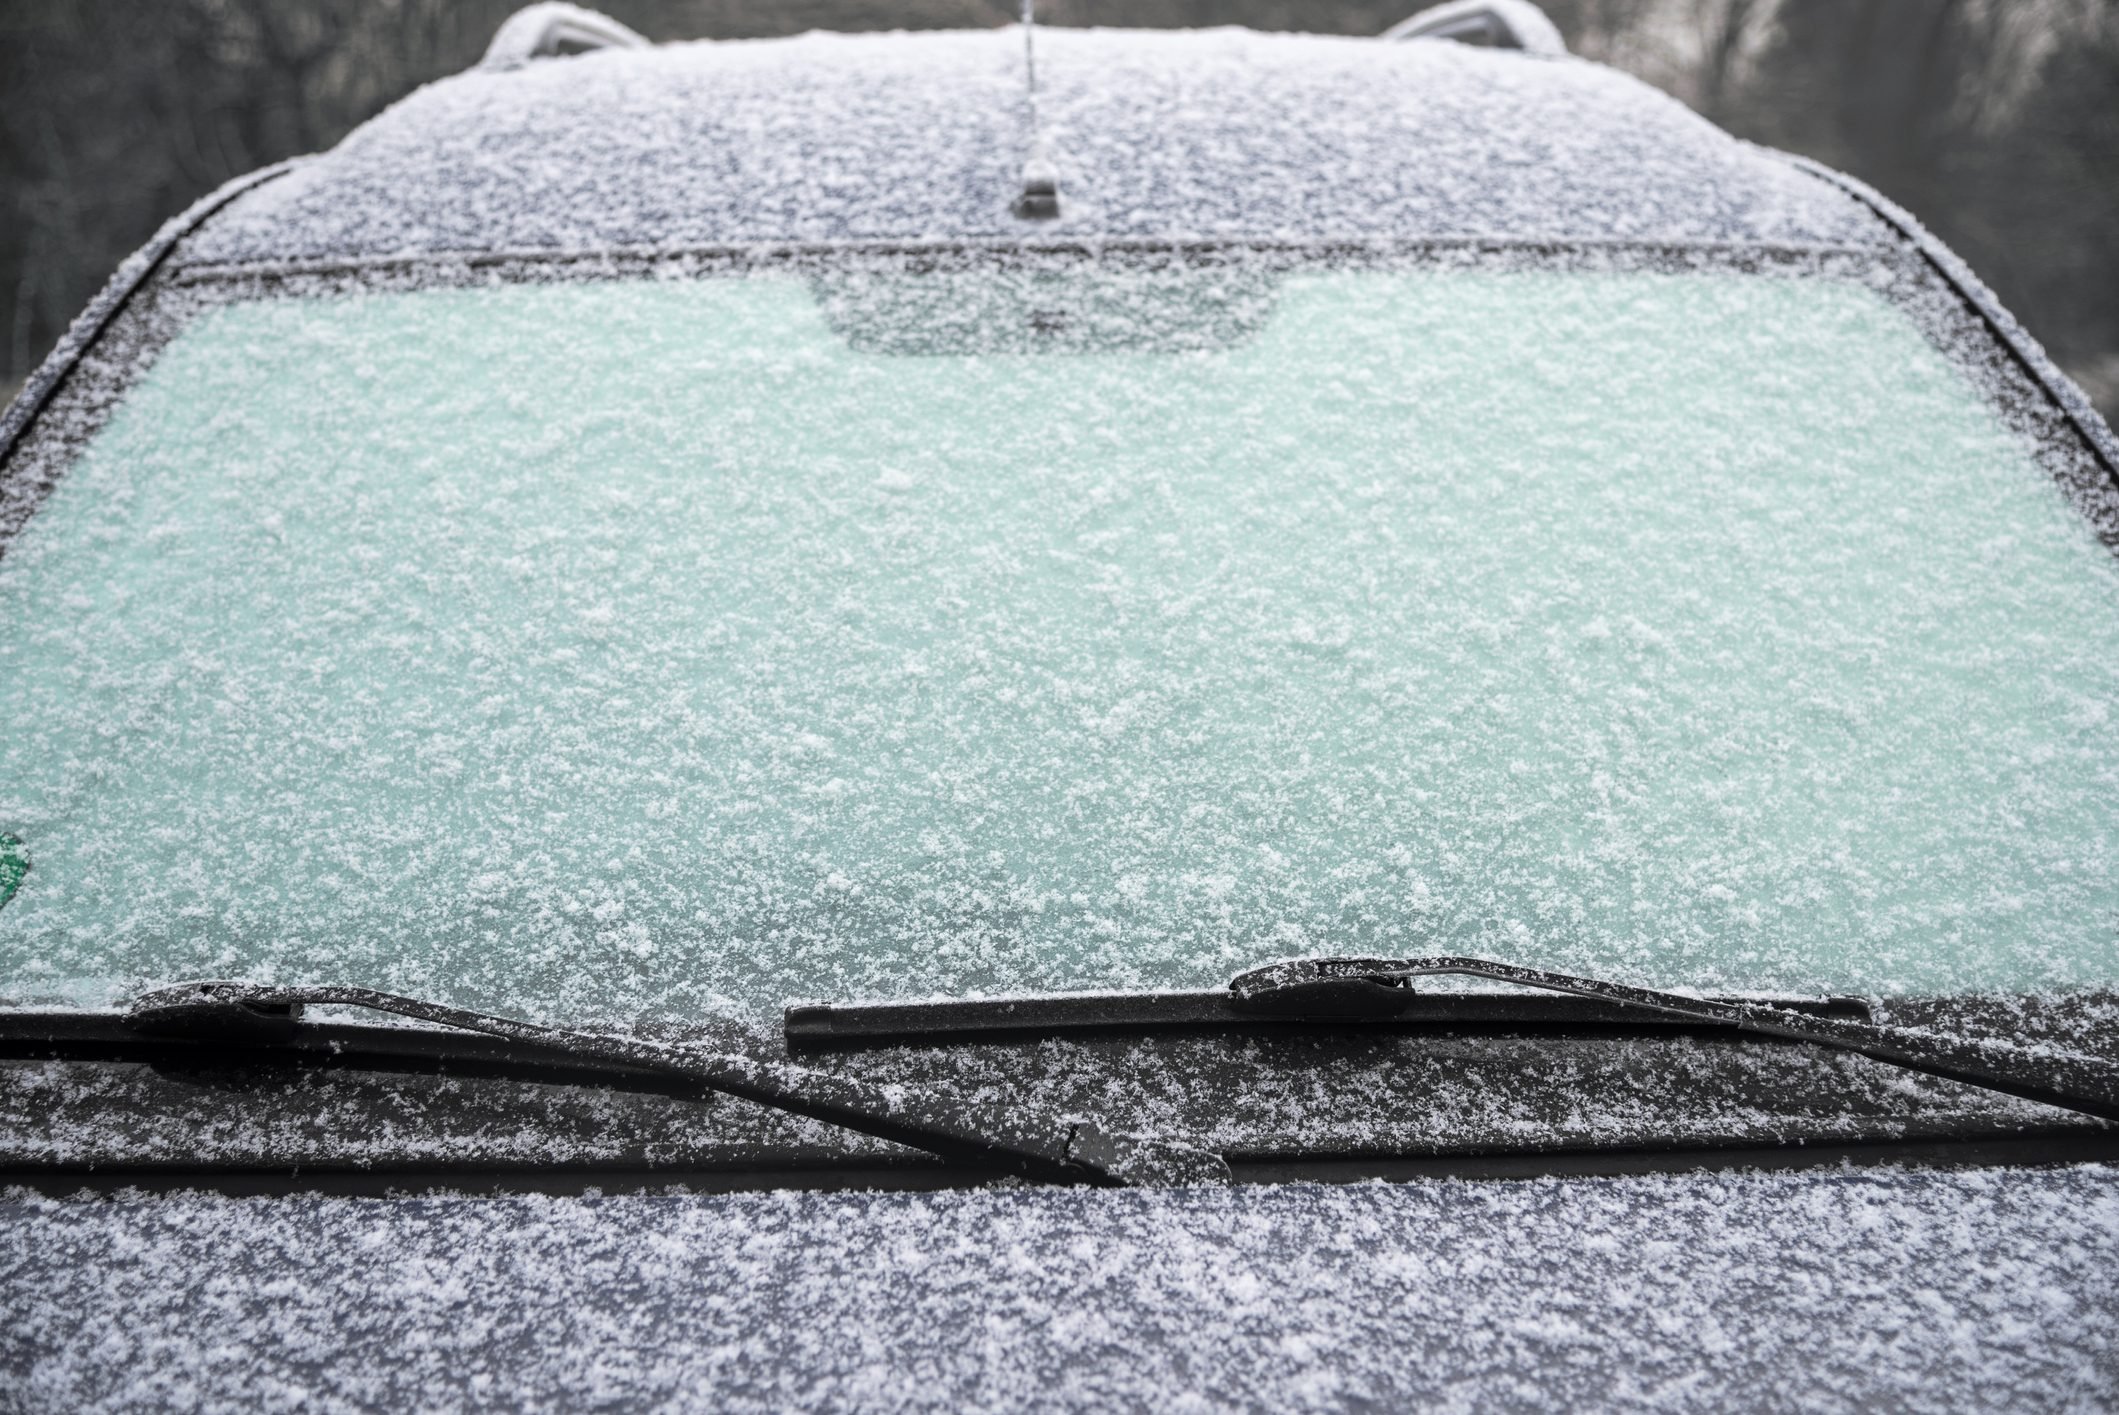 2x Car Windshield Snow Melt Spray Multi-purpose Deicing And Snow